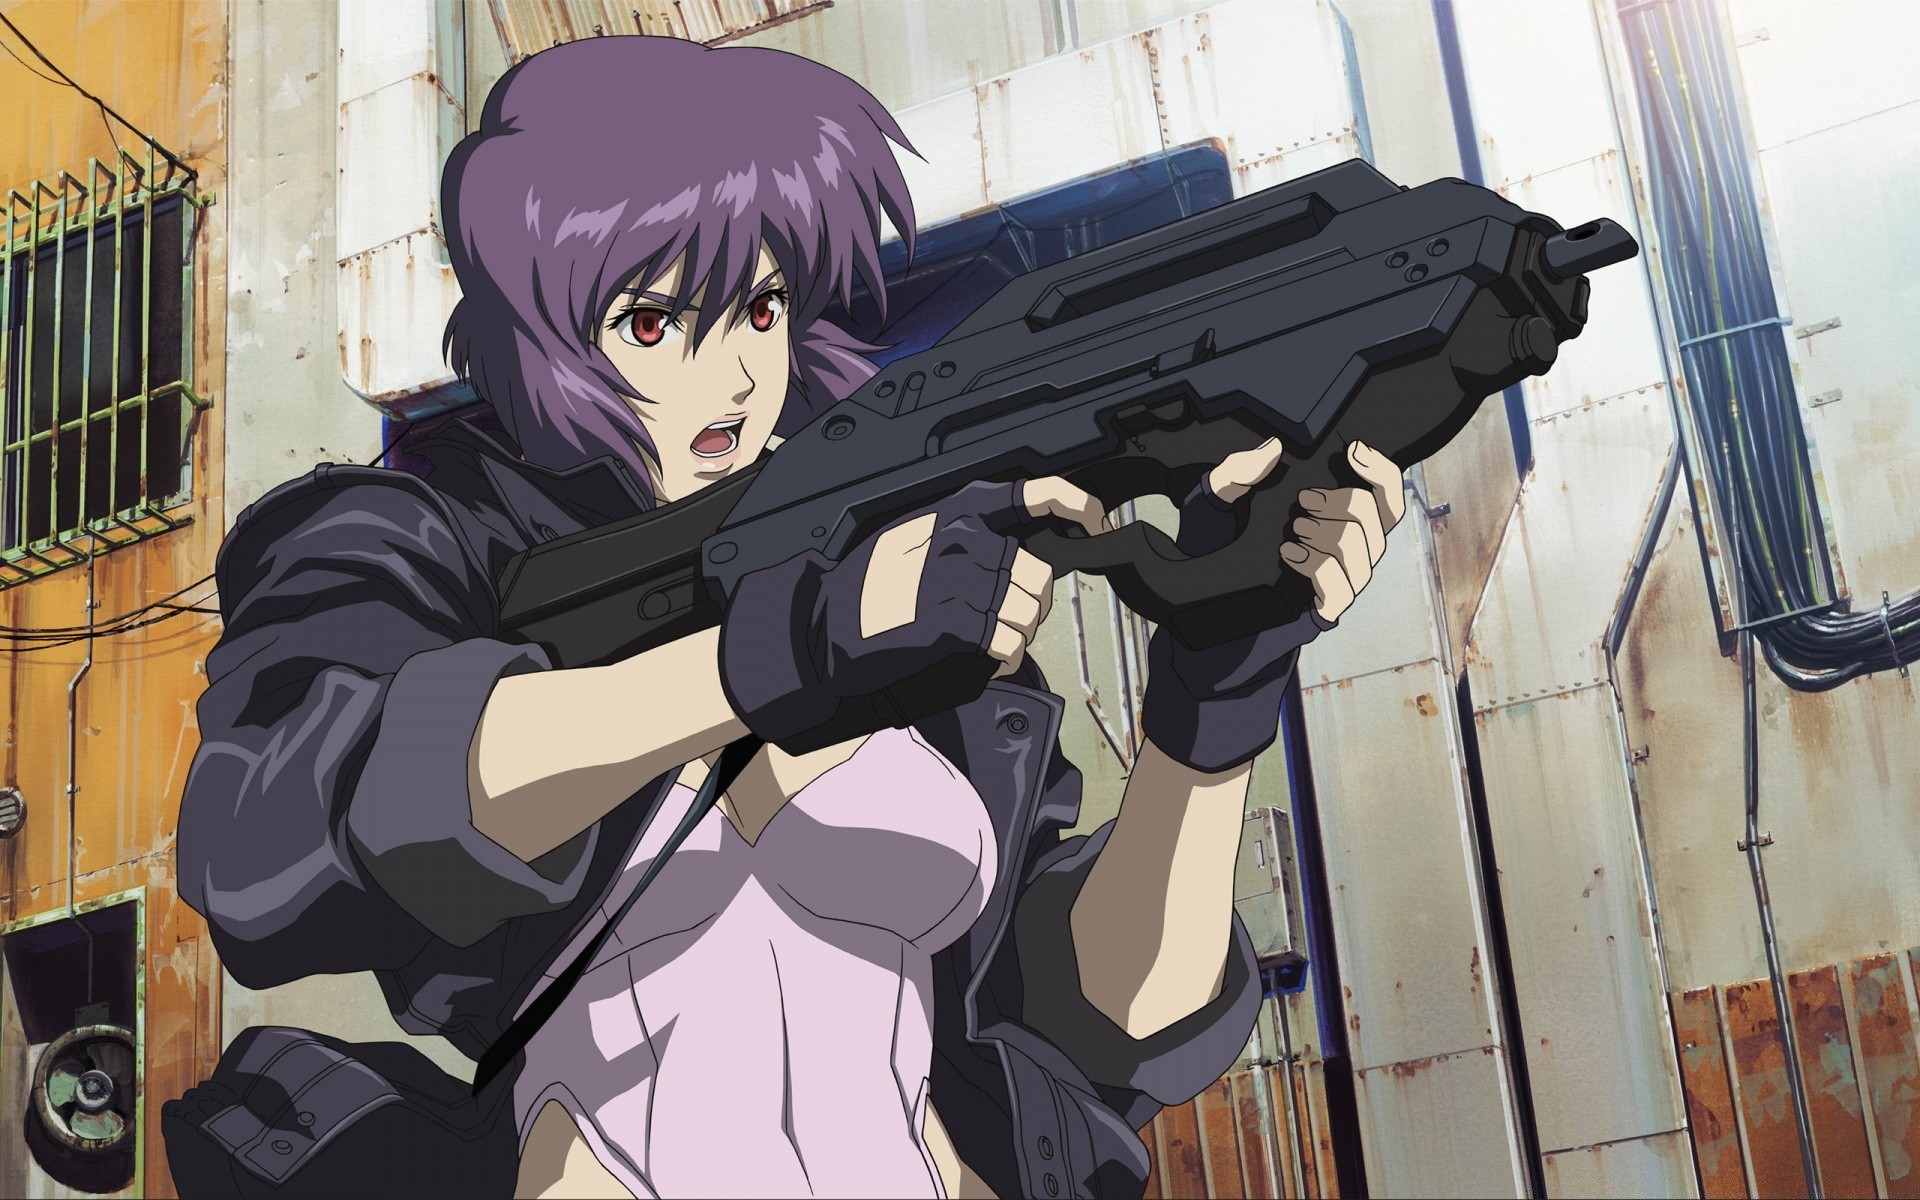 anime offense weapon gun force battle war police indoors security military danger pistol adult gang